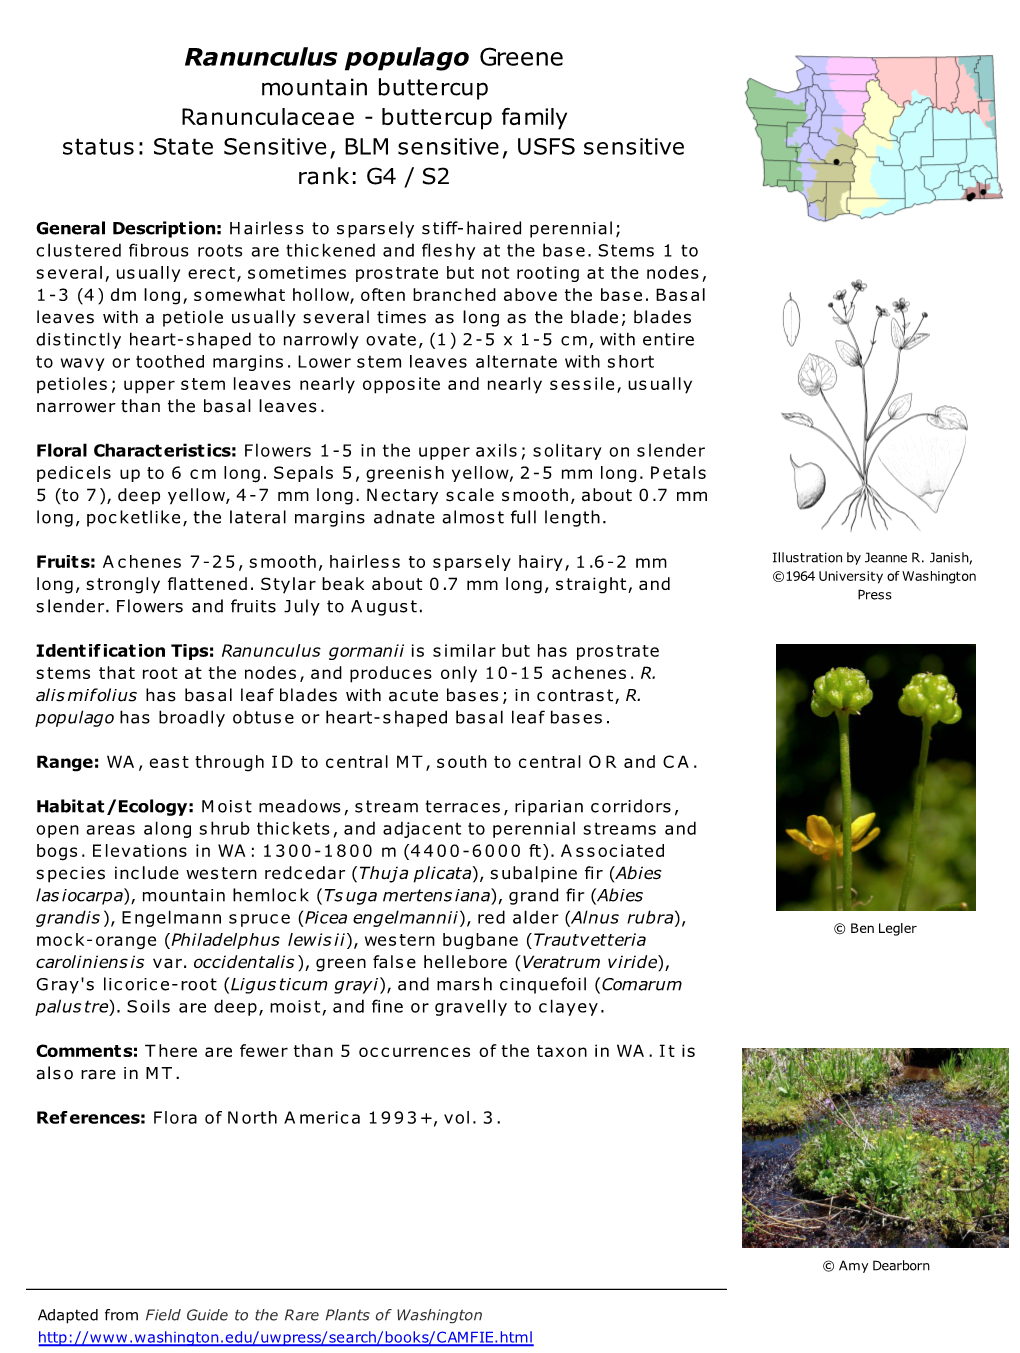 Ranunculus Populago Greene Mountain Buttercup Ranunculaceae - Buttercup Family Status: State Sensitive, BLM Sensitive, USFS Sensitive Rank: G4 / S2